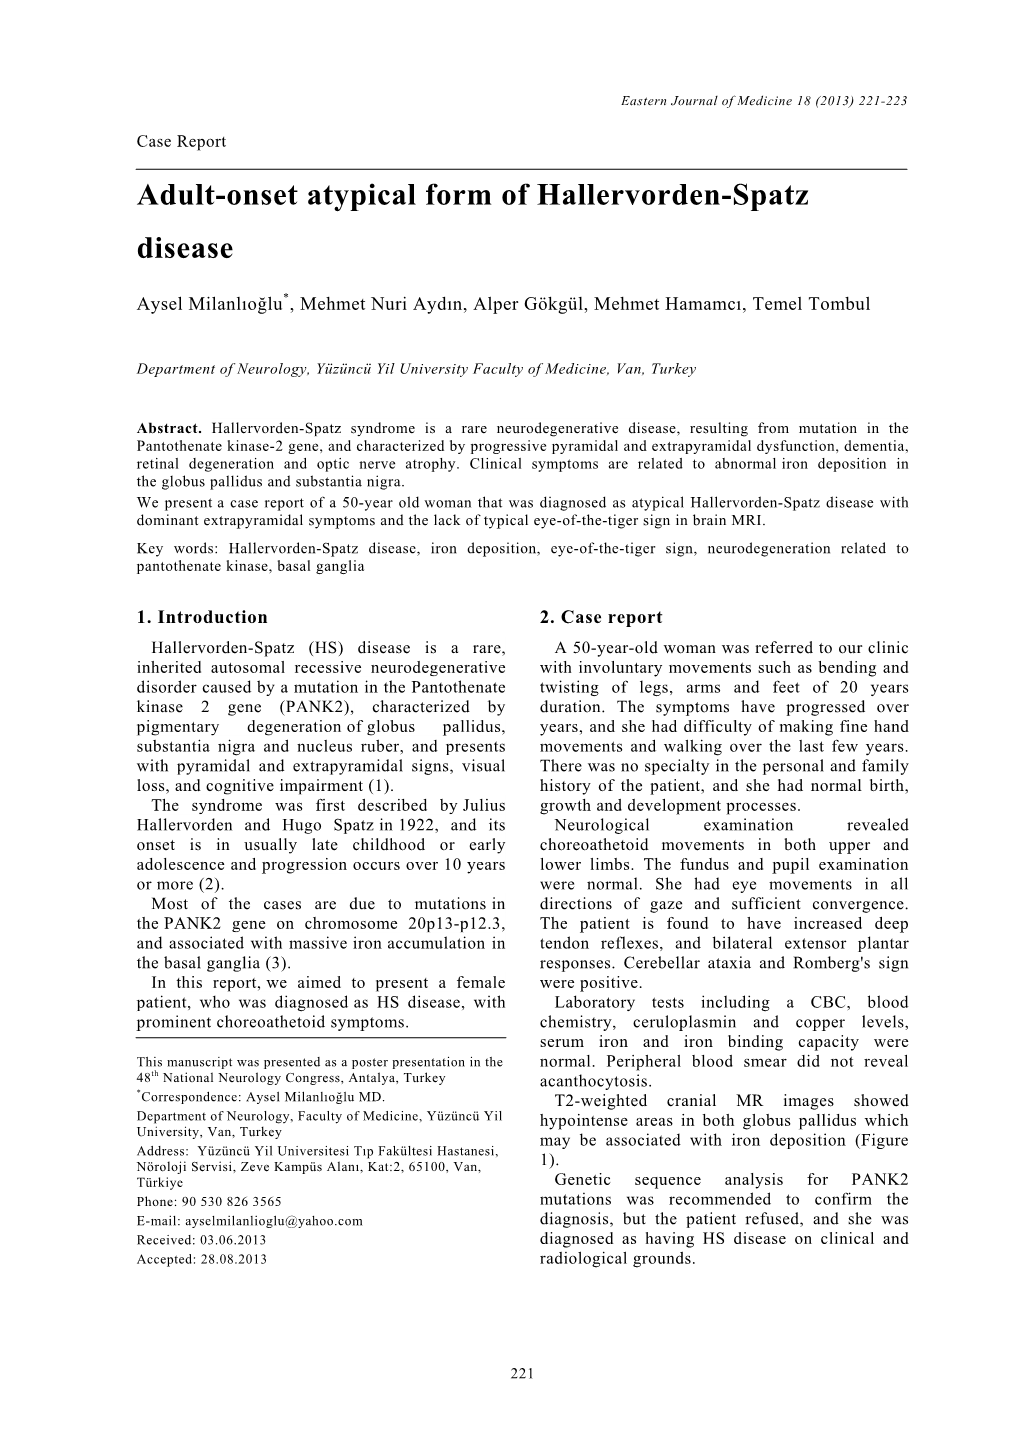 Adult-Onset Atypical Form of Hallervorden-Spatz Disease